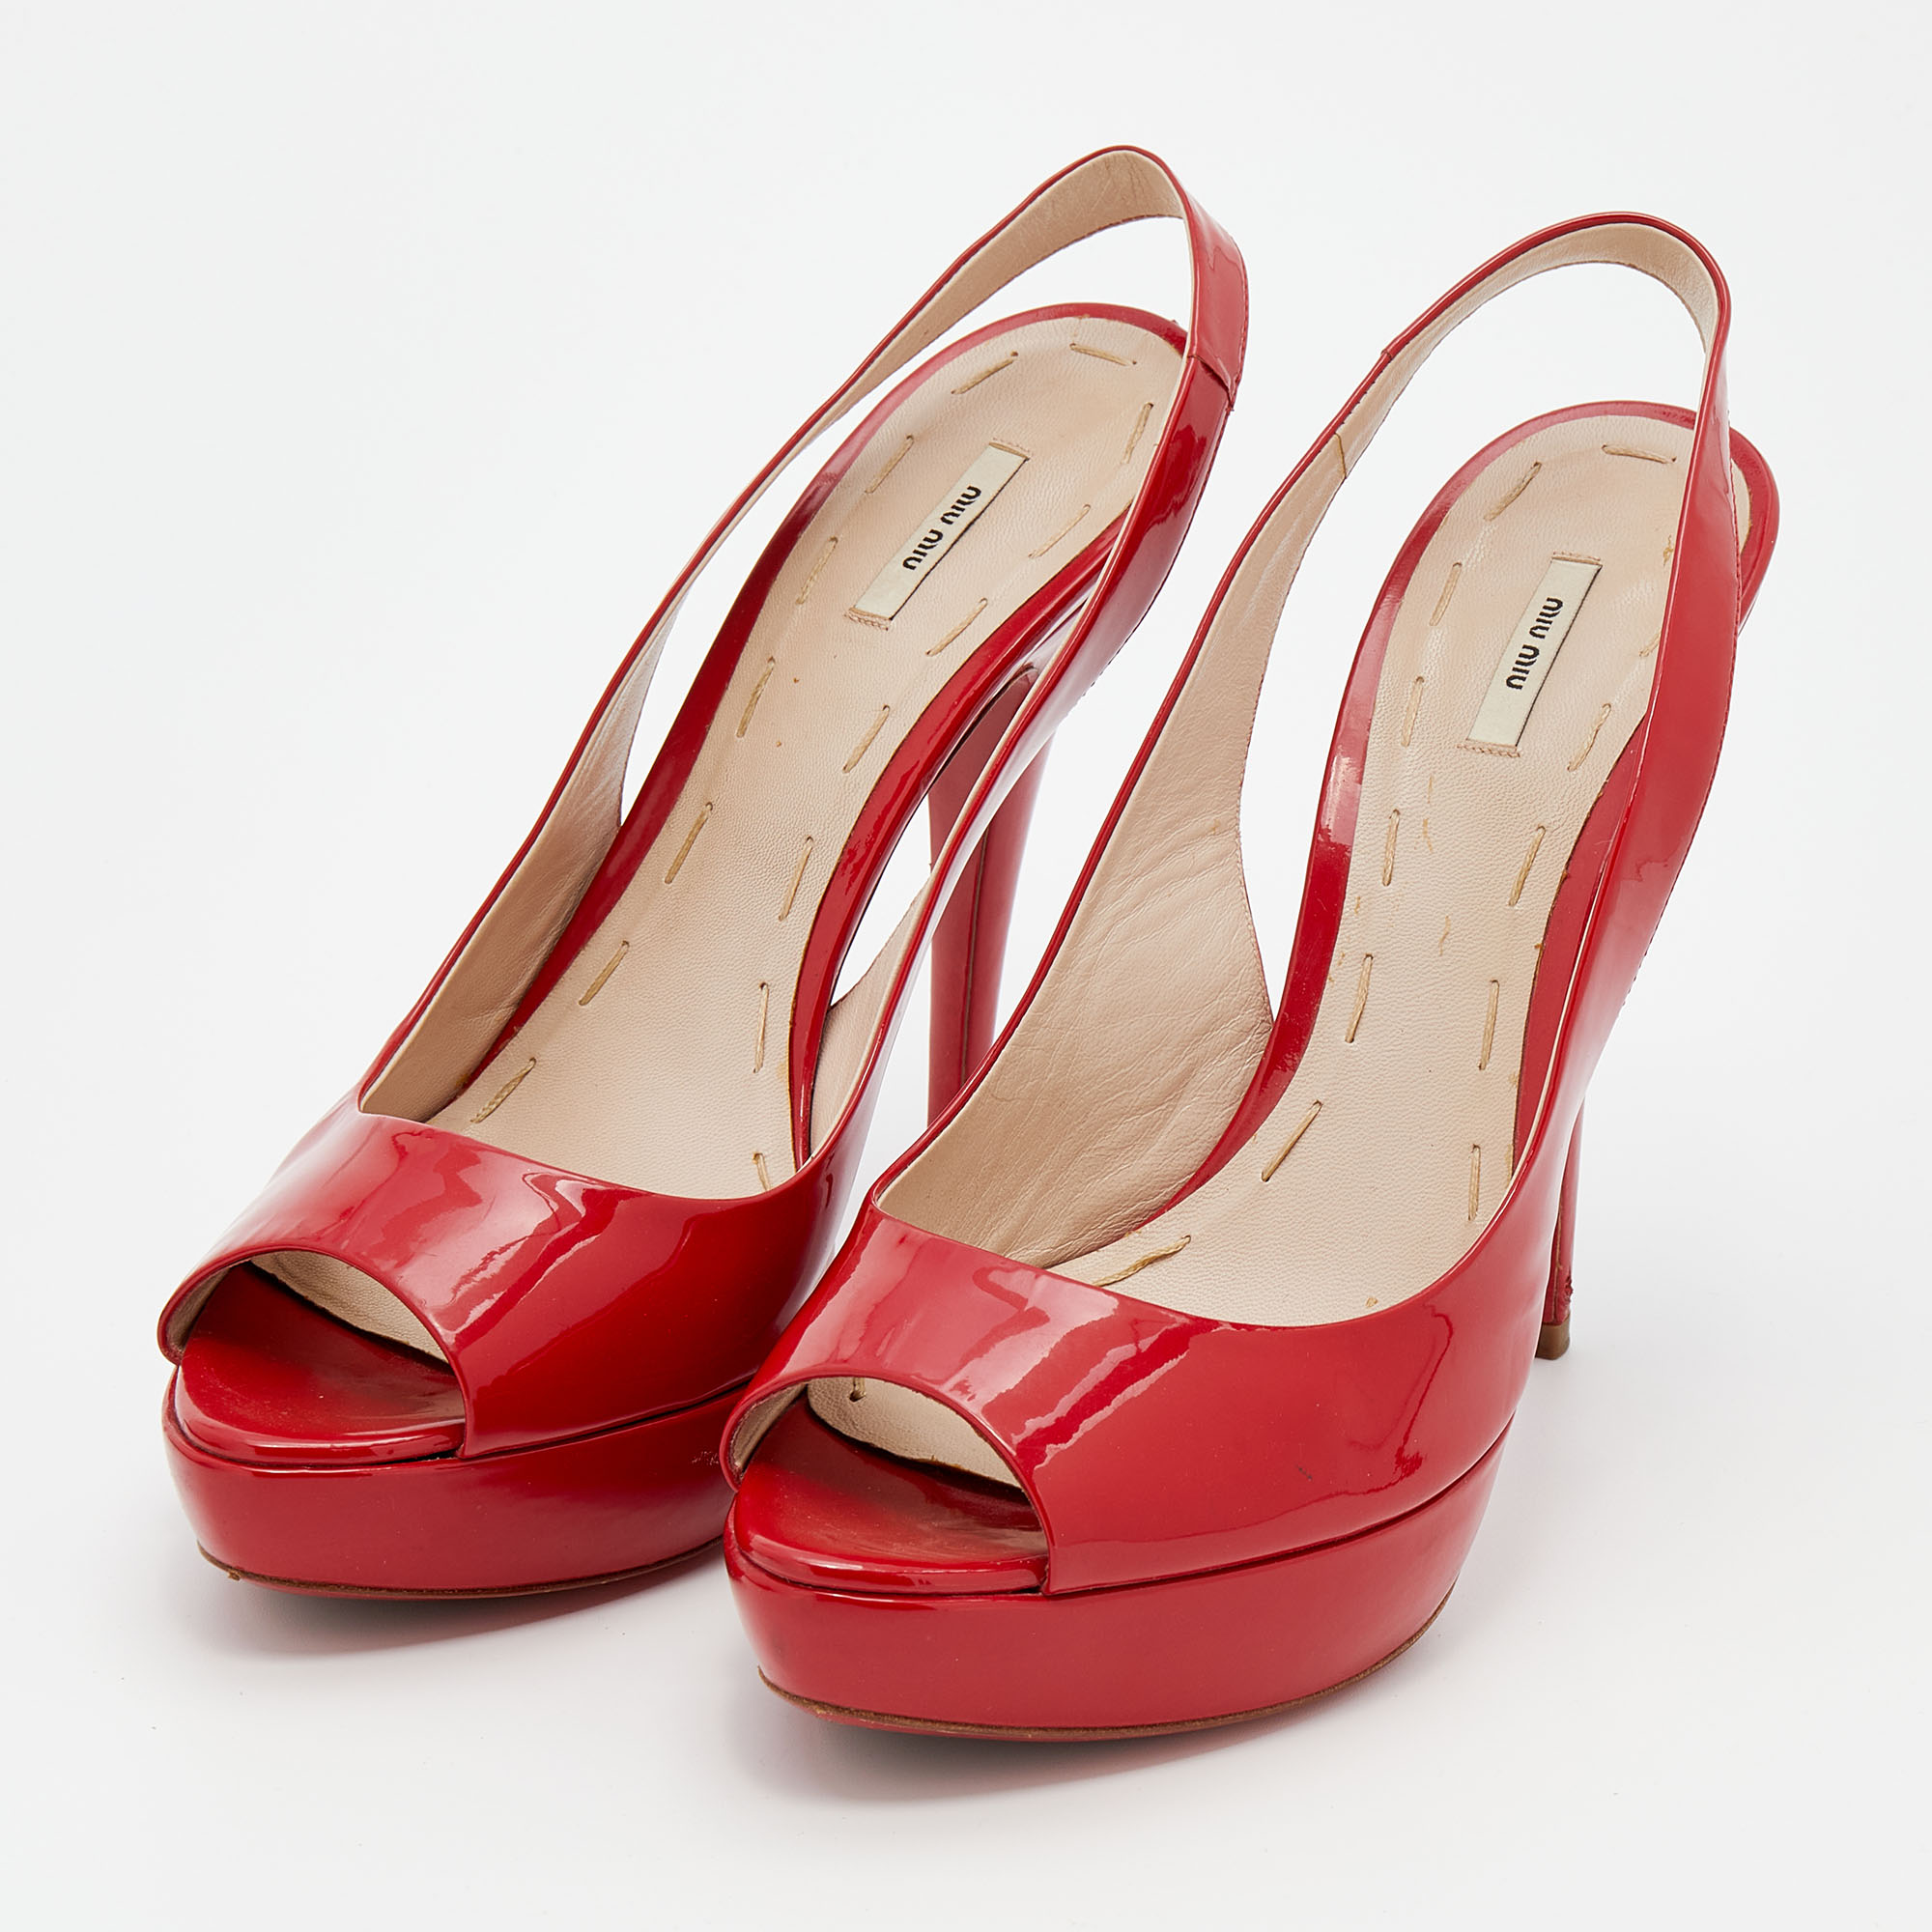 

Miu Miu Red Patent Leather Peep Toe Platform Slingback Sandals Size